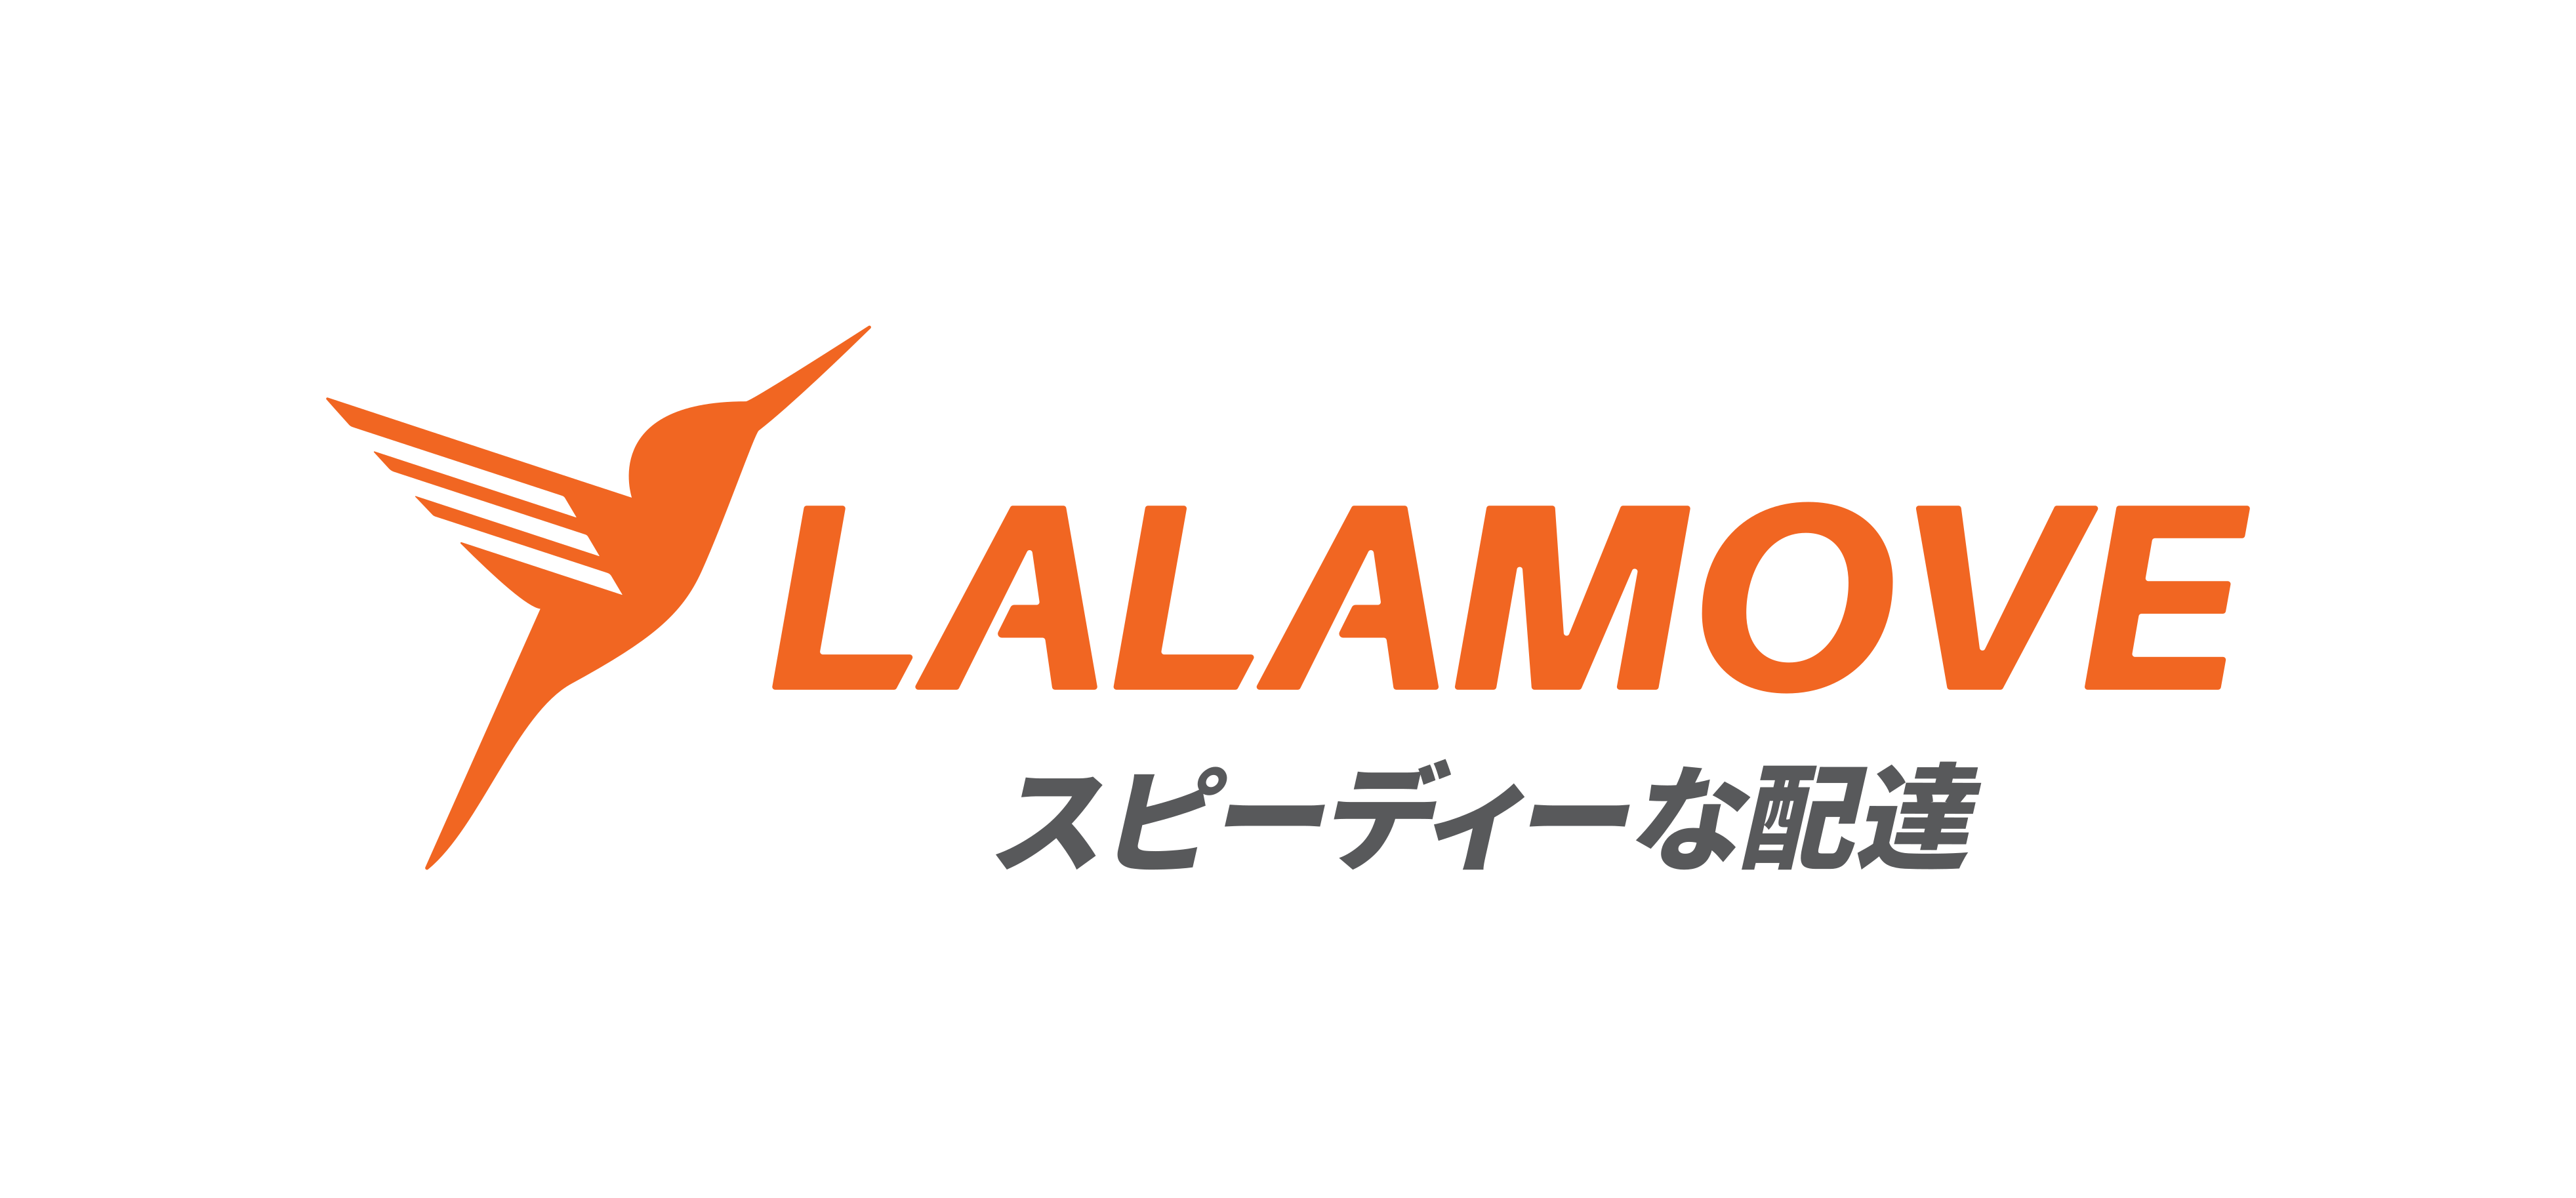 Lalamove Japan株式会社